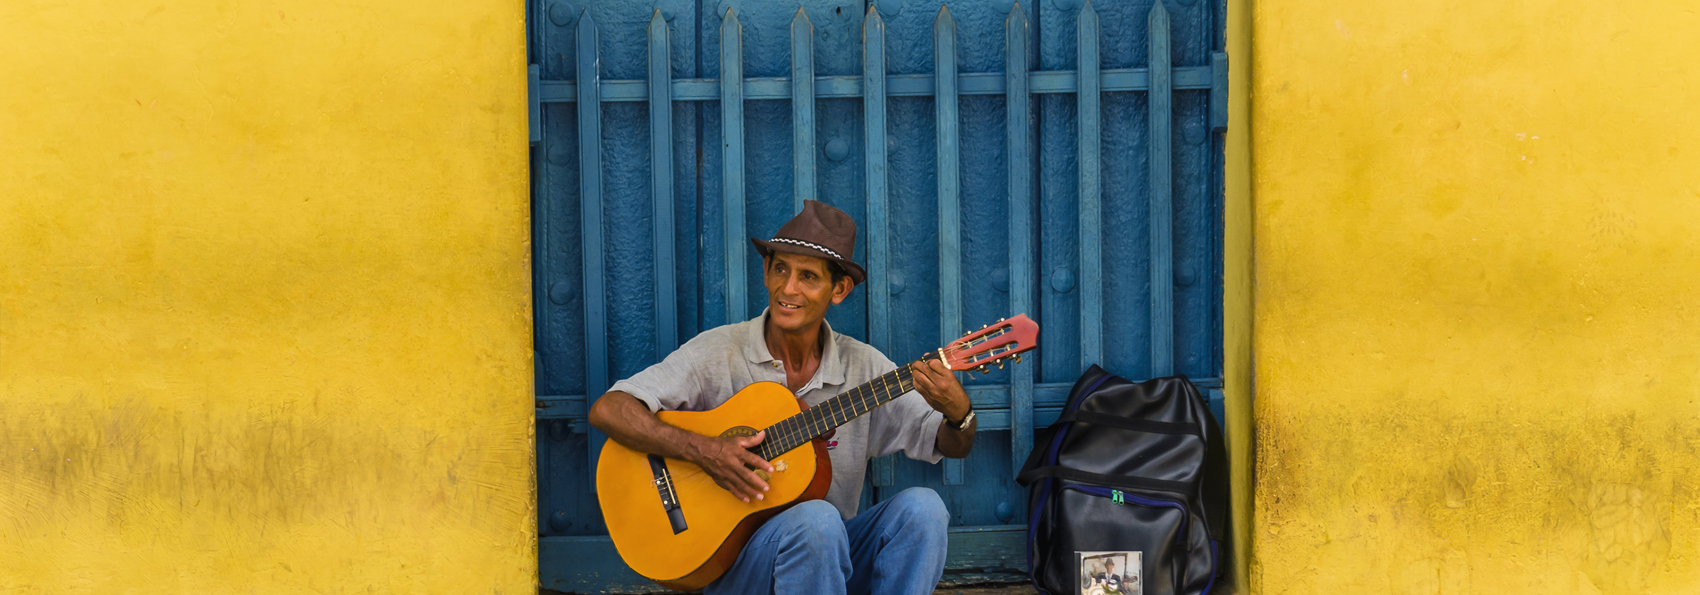 cuba - trinidad musiker_gul gade